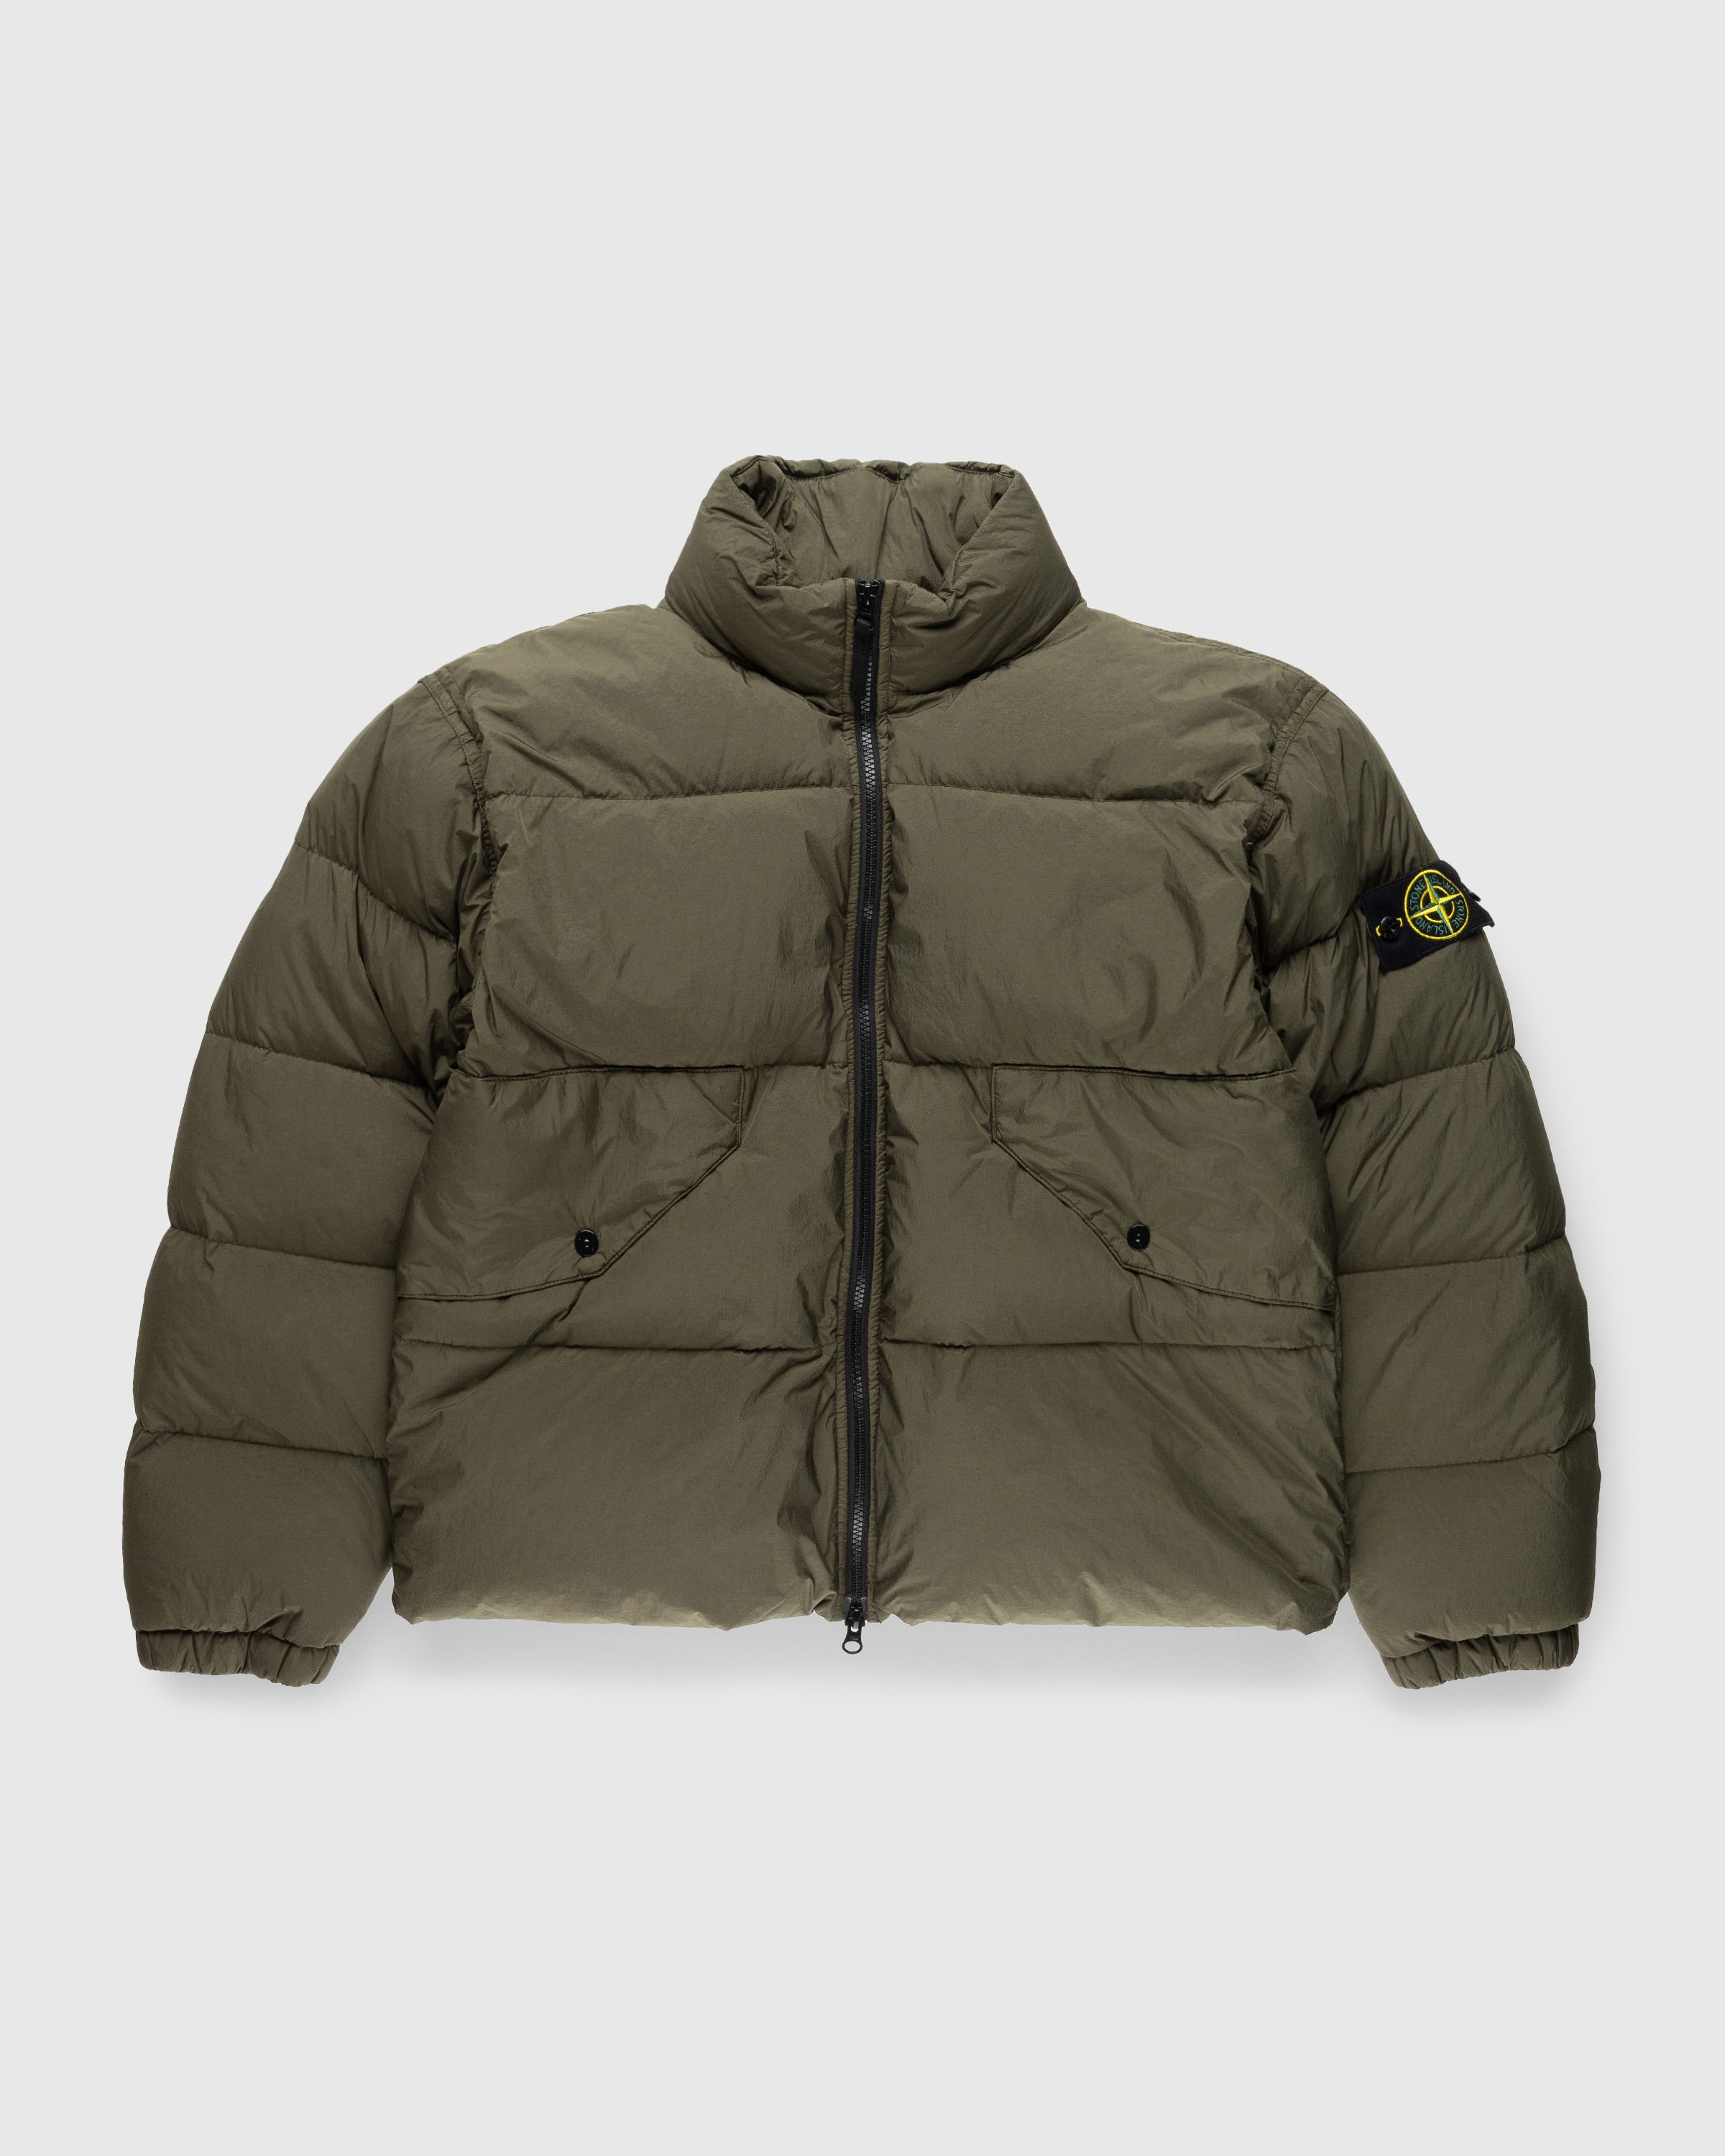 Stone Island - Garment-Dyed Recycled Nylon Down Jacket Olive - Clothing - Green - Image 1